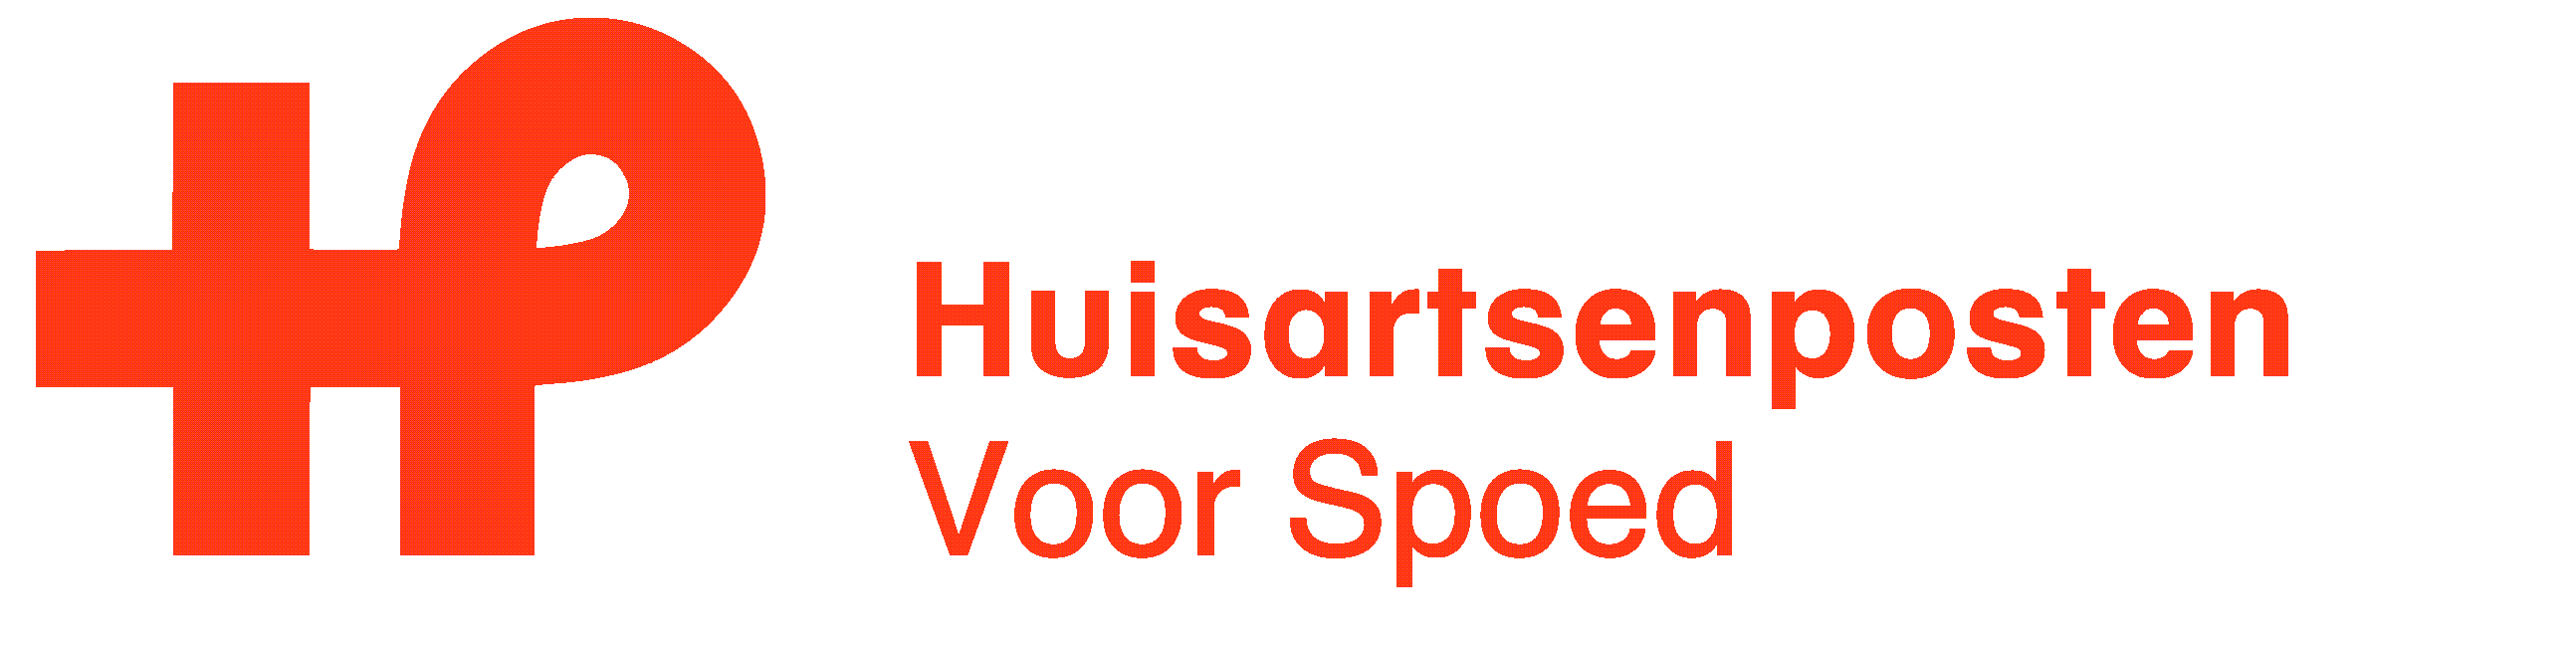 logo Huisartsenposten Amsterdam